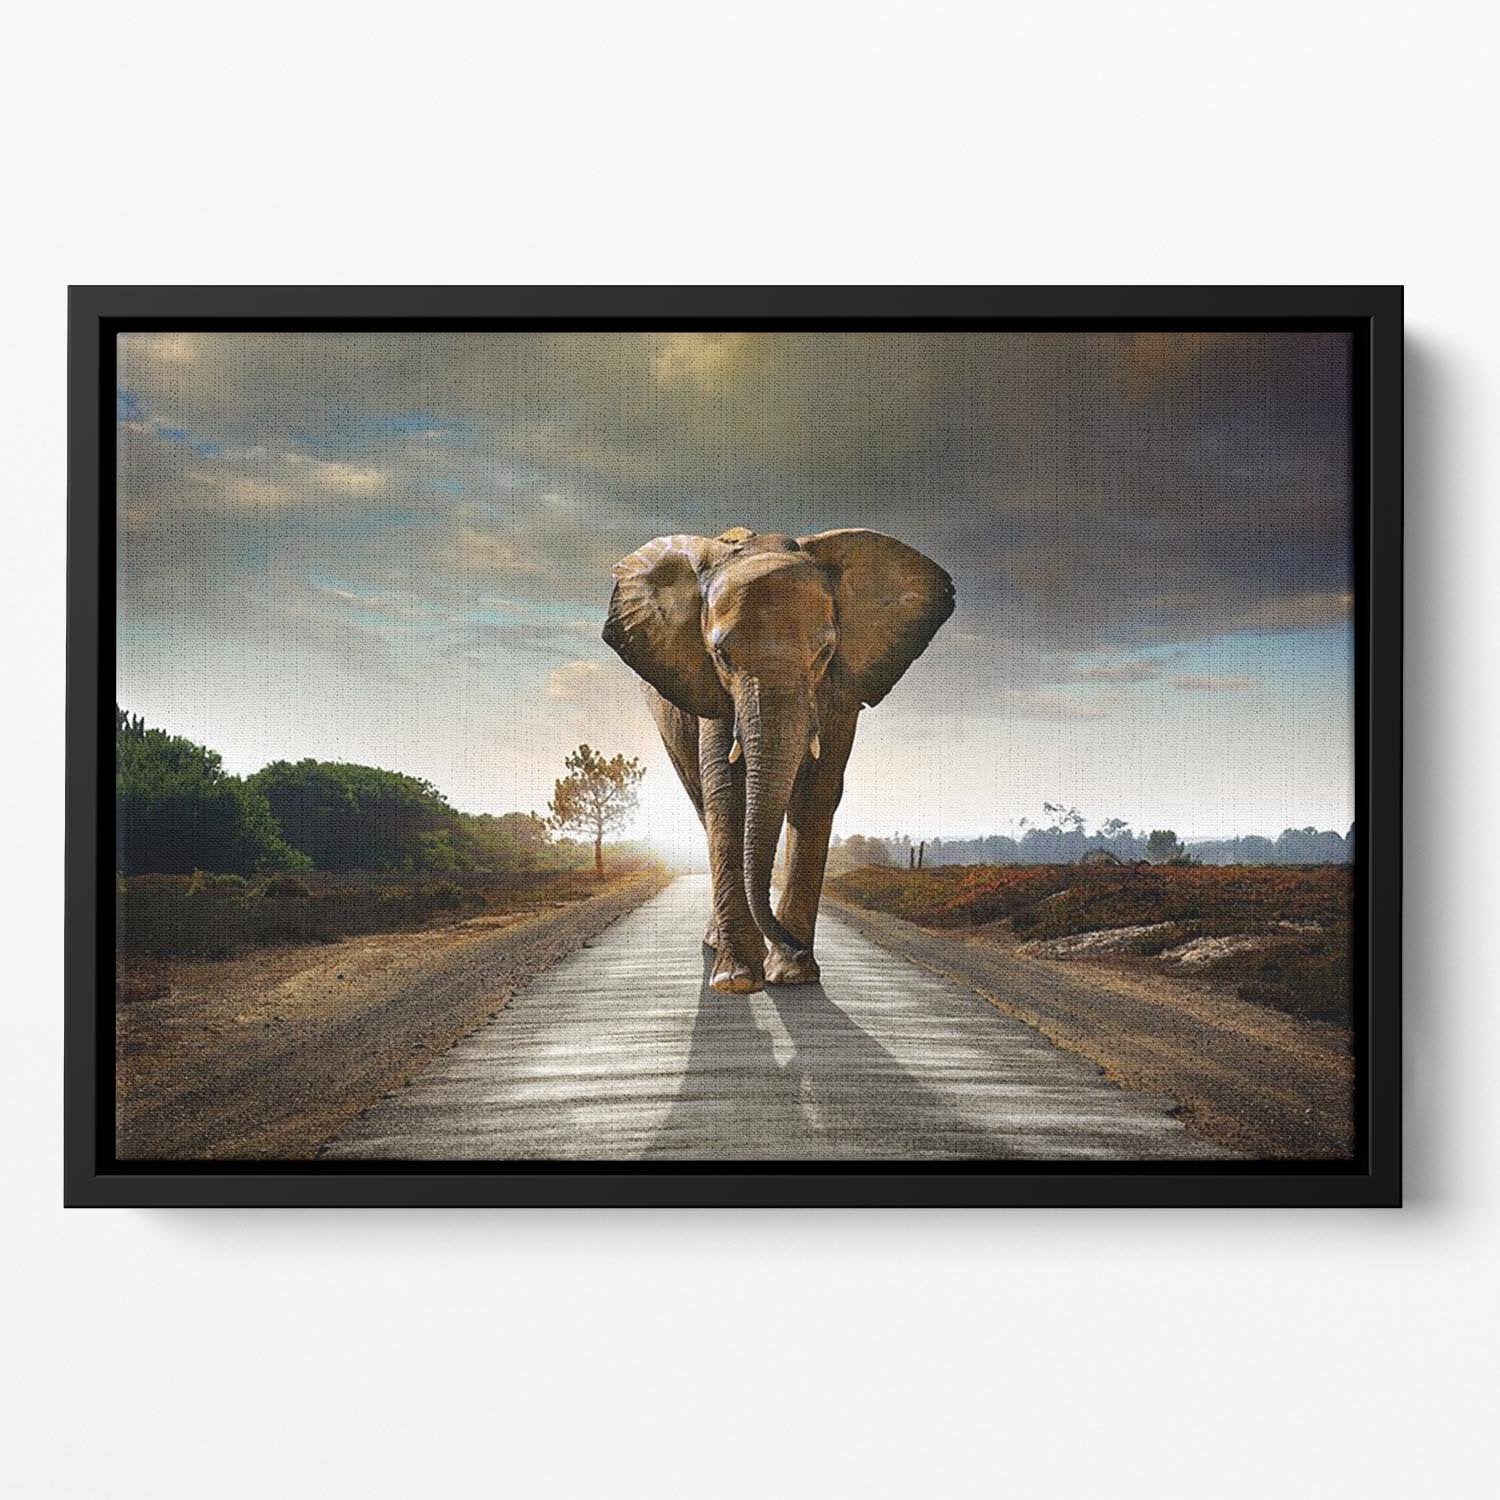 Single elephant walking in a road Floating Framed Canvas - Canvas Art Rocks - 2